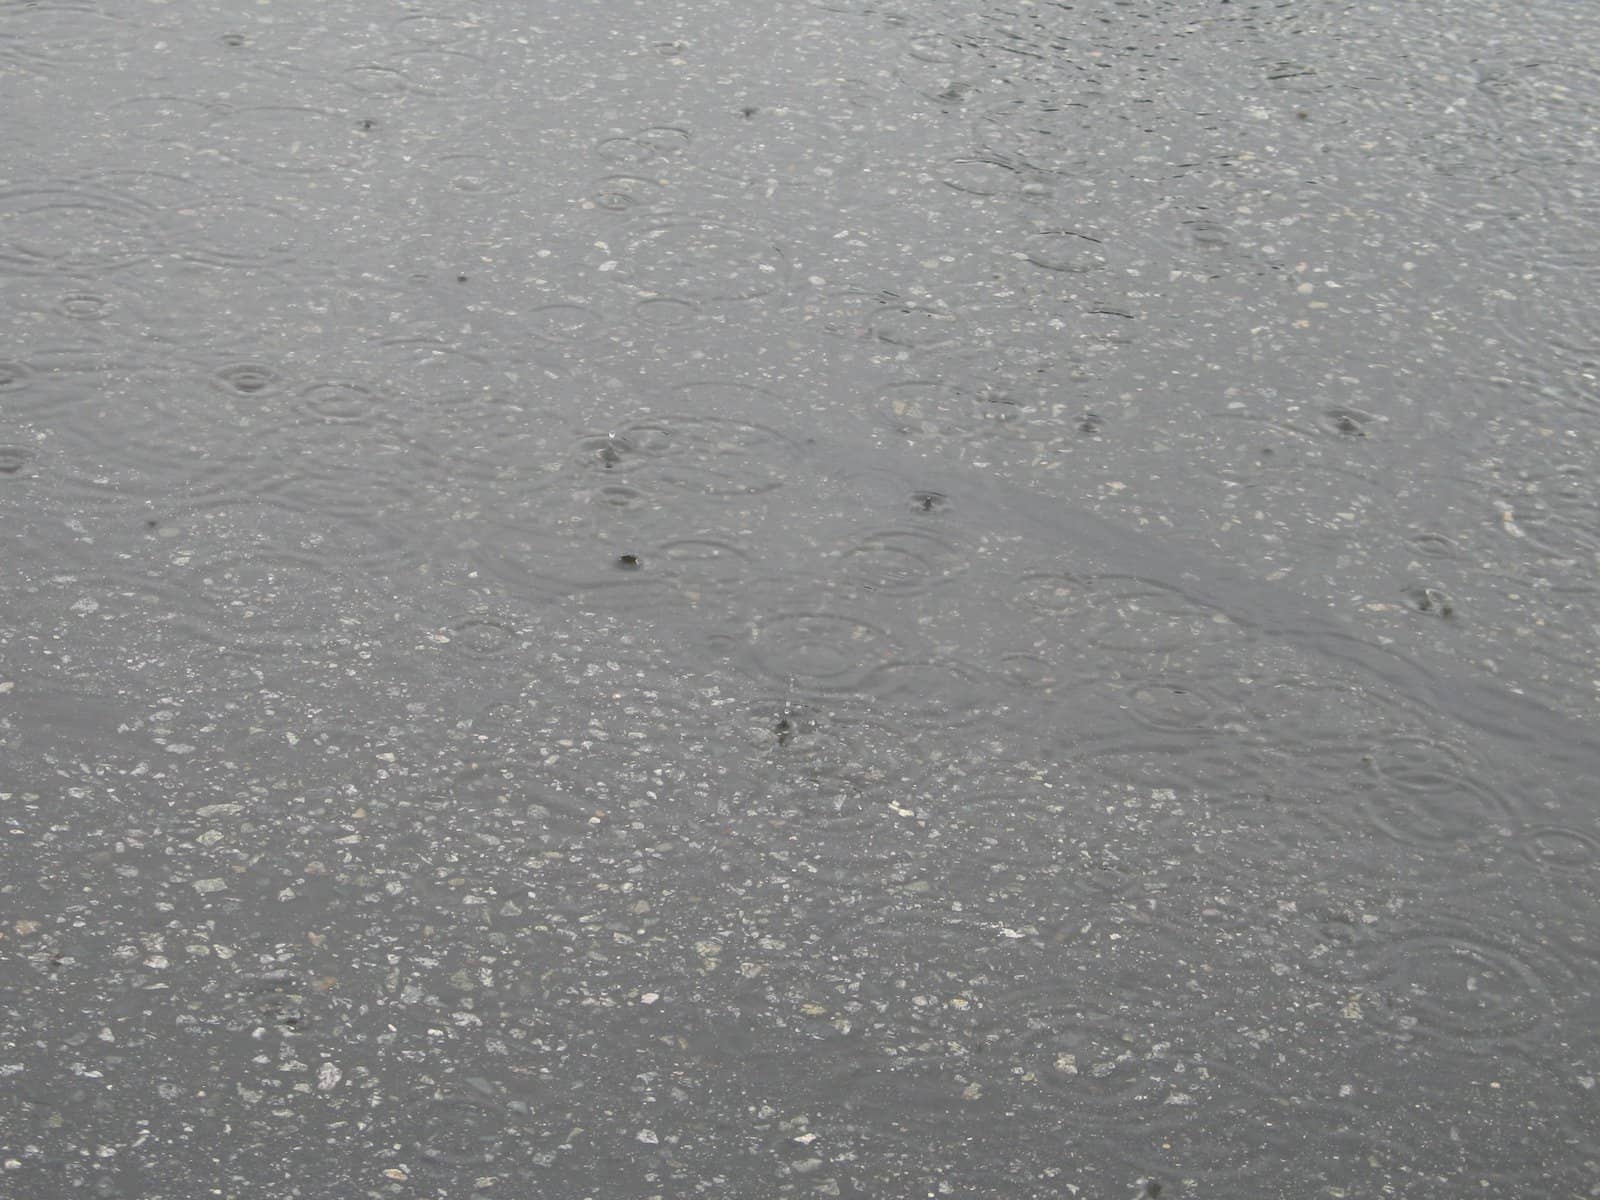 rain on the pavement